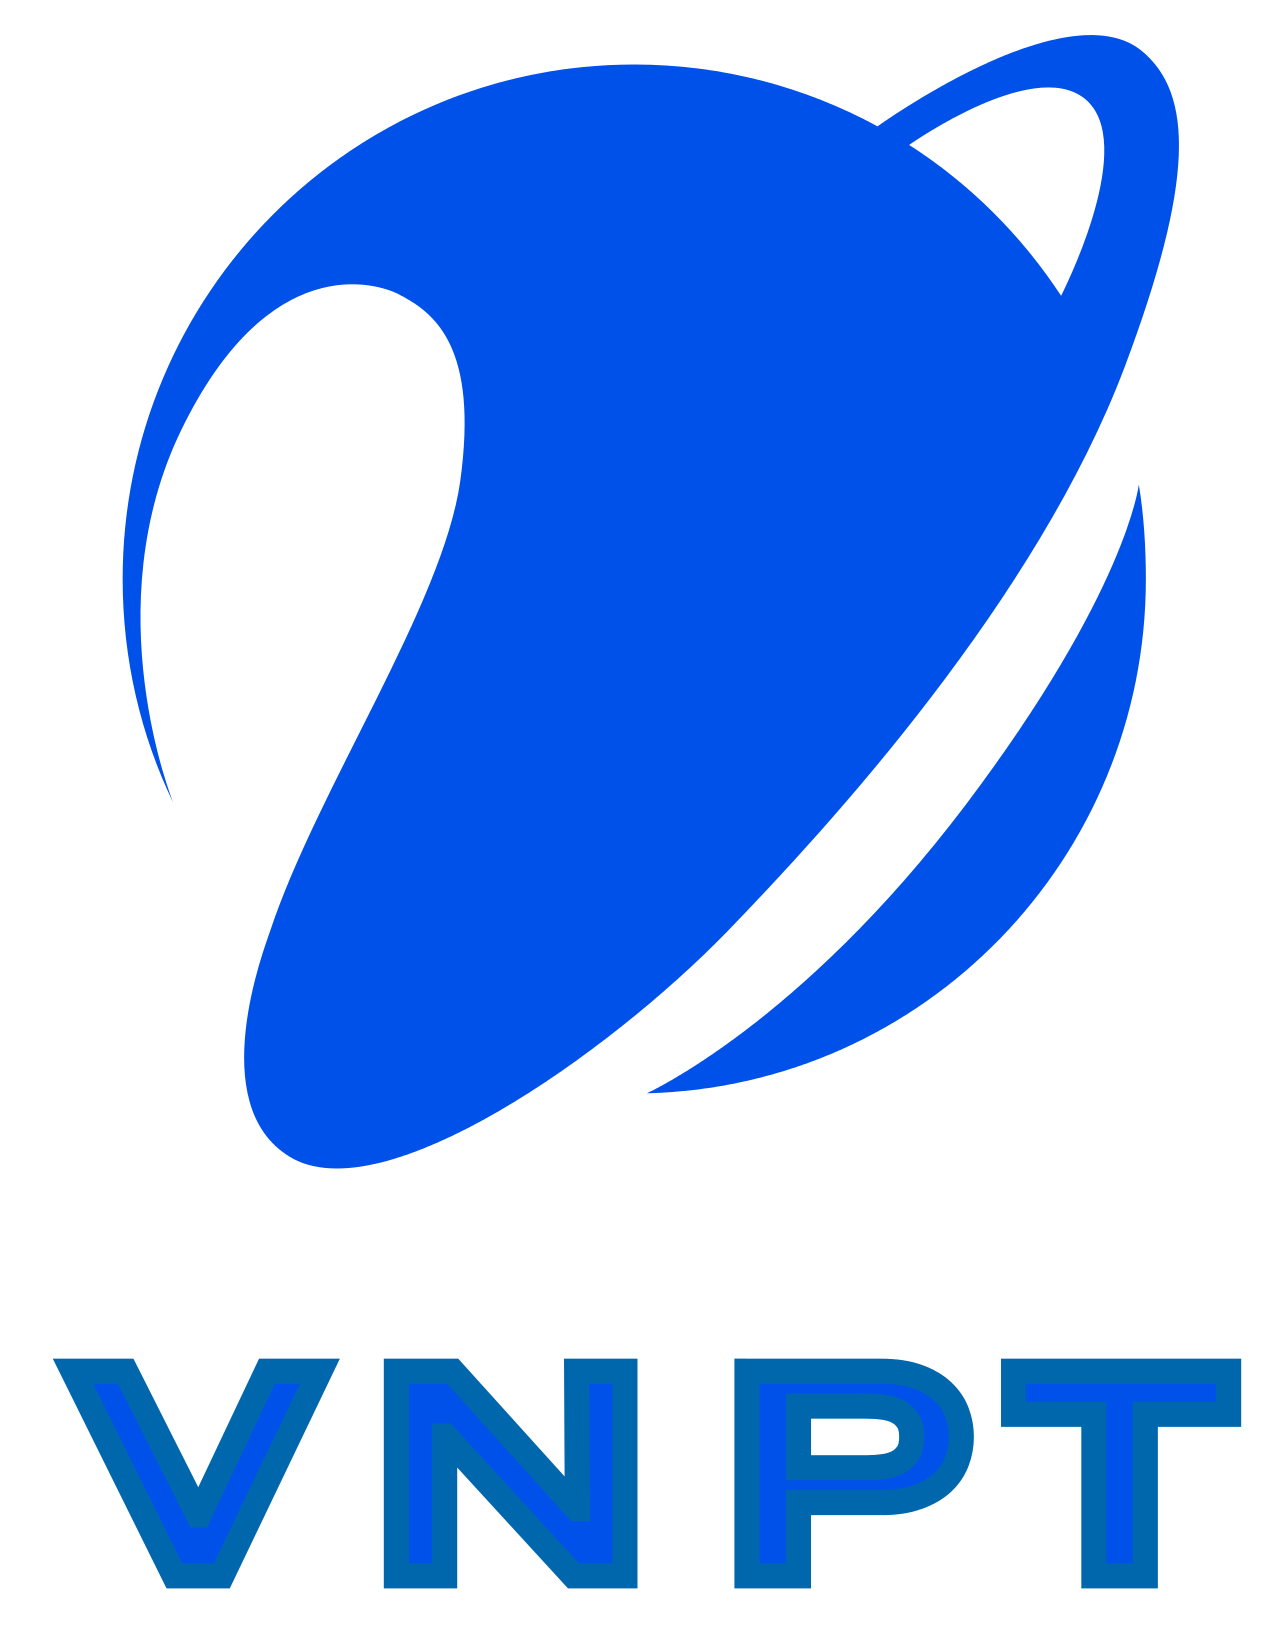 VNPT - Vietnam Posts and Telecommunications Group